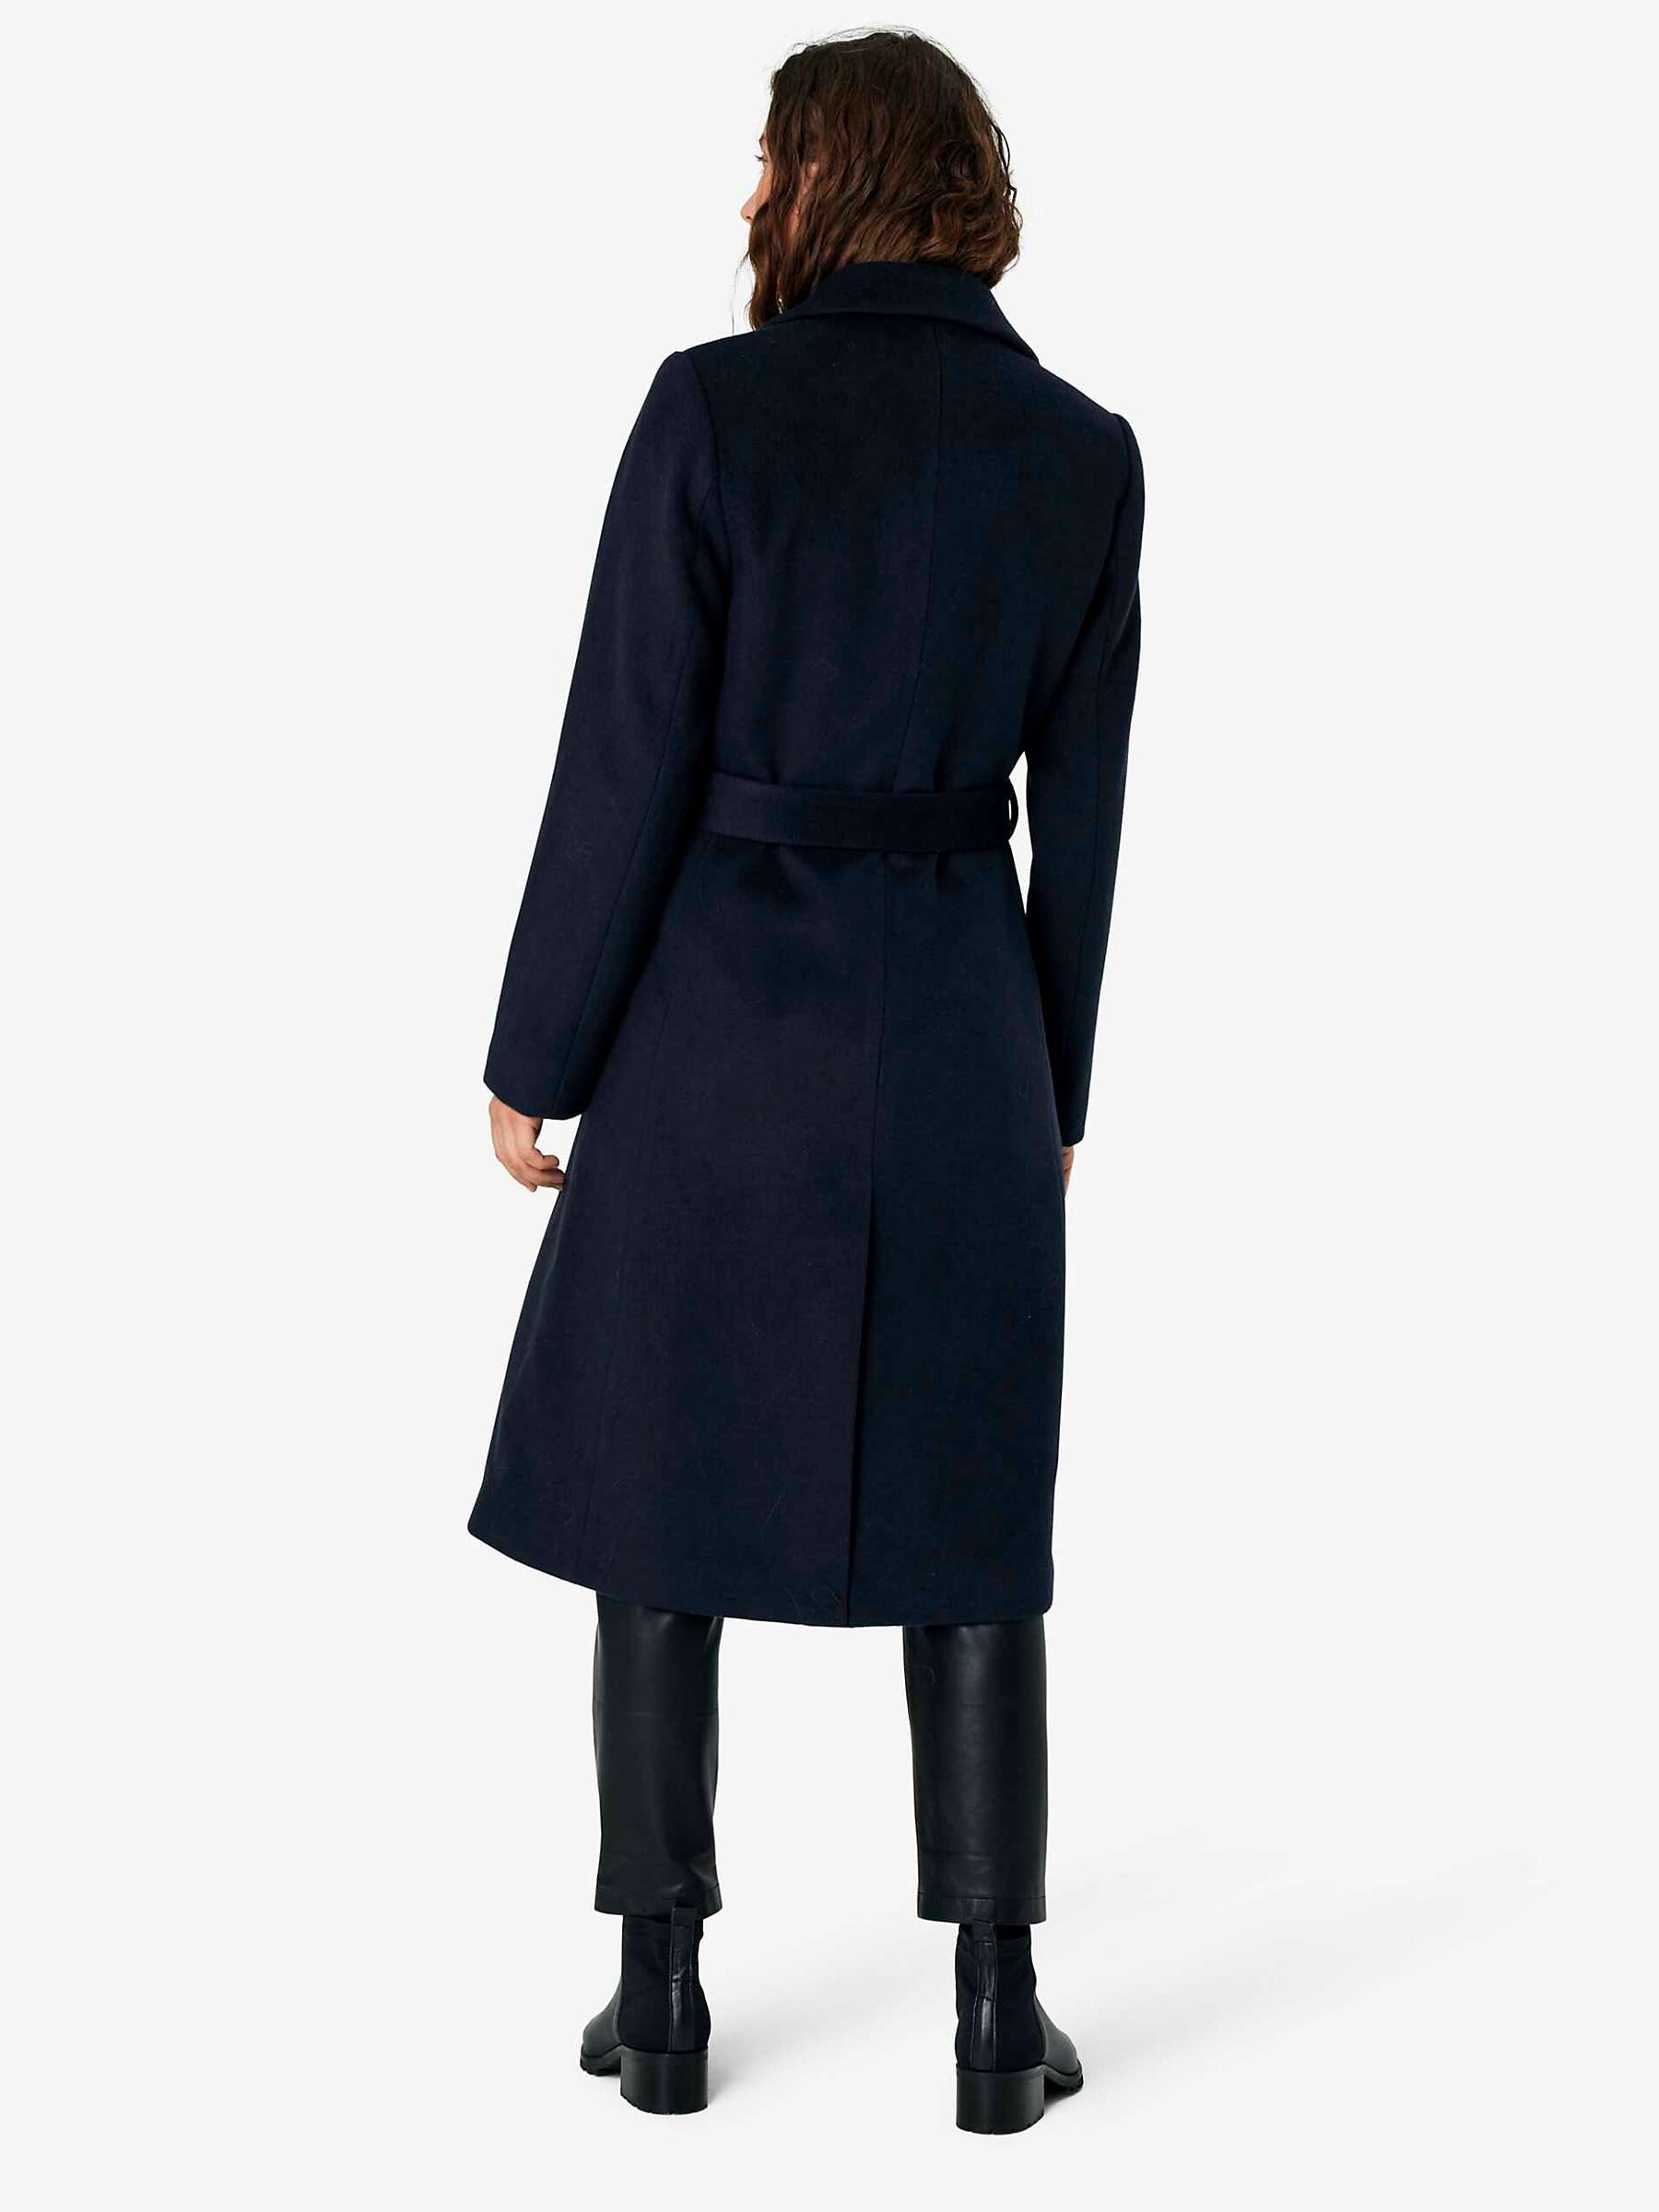 Noa Noa Cecilia Long Wool Blend Coat, Navy Blazer at John Lewis & Partners